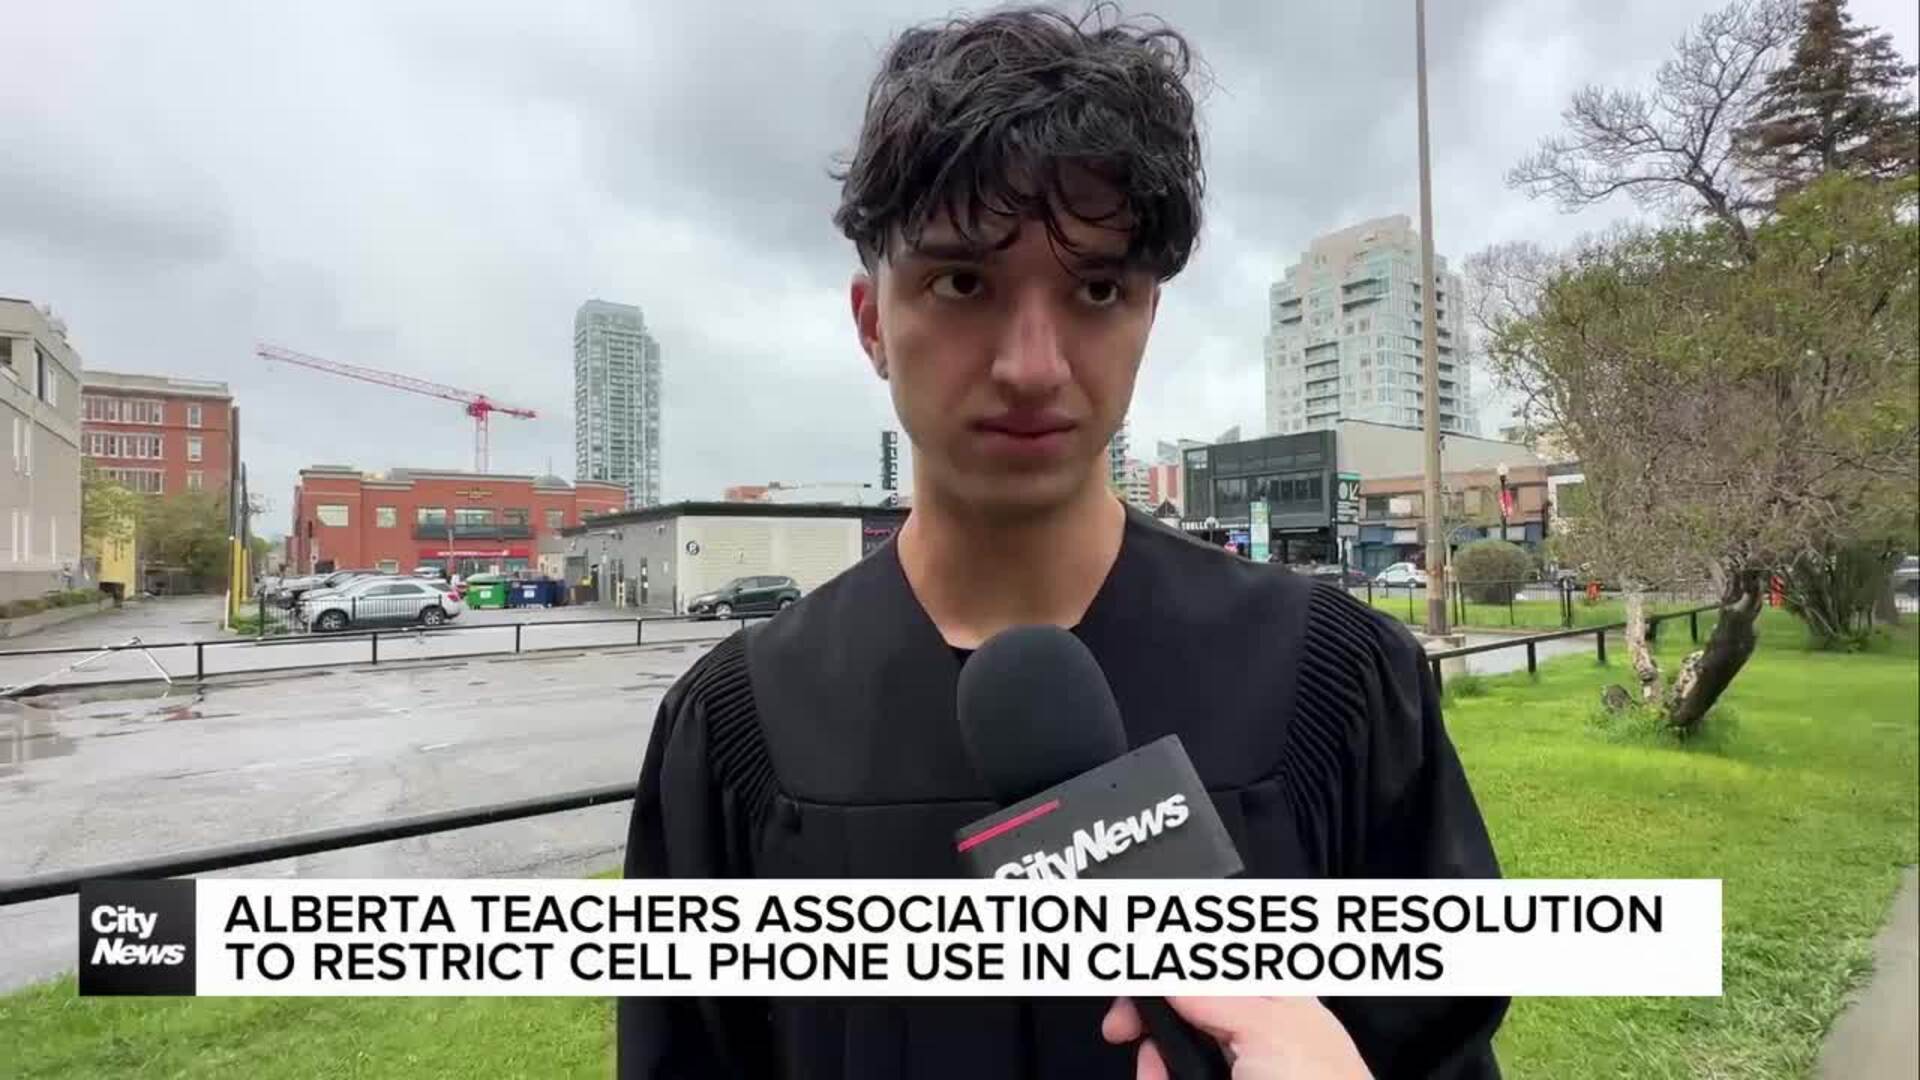 Alberta Teachers Association approves student smart phone restrictions